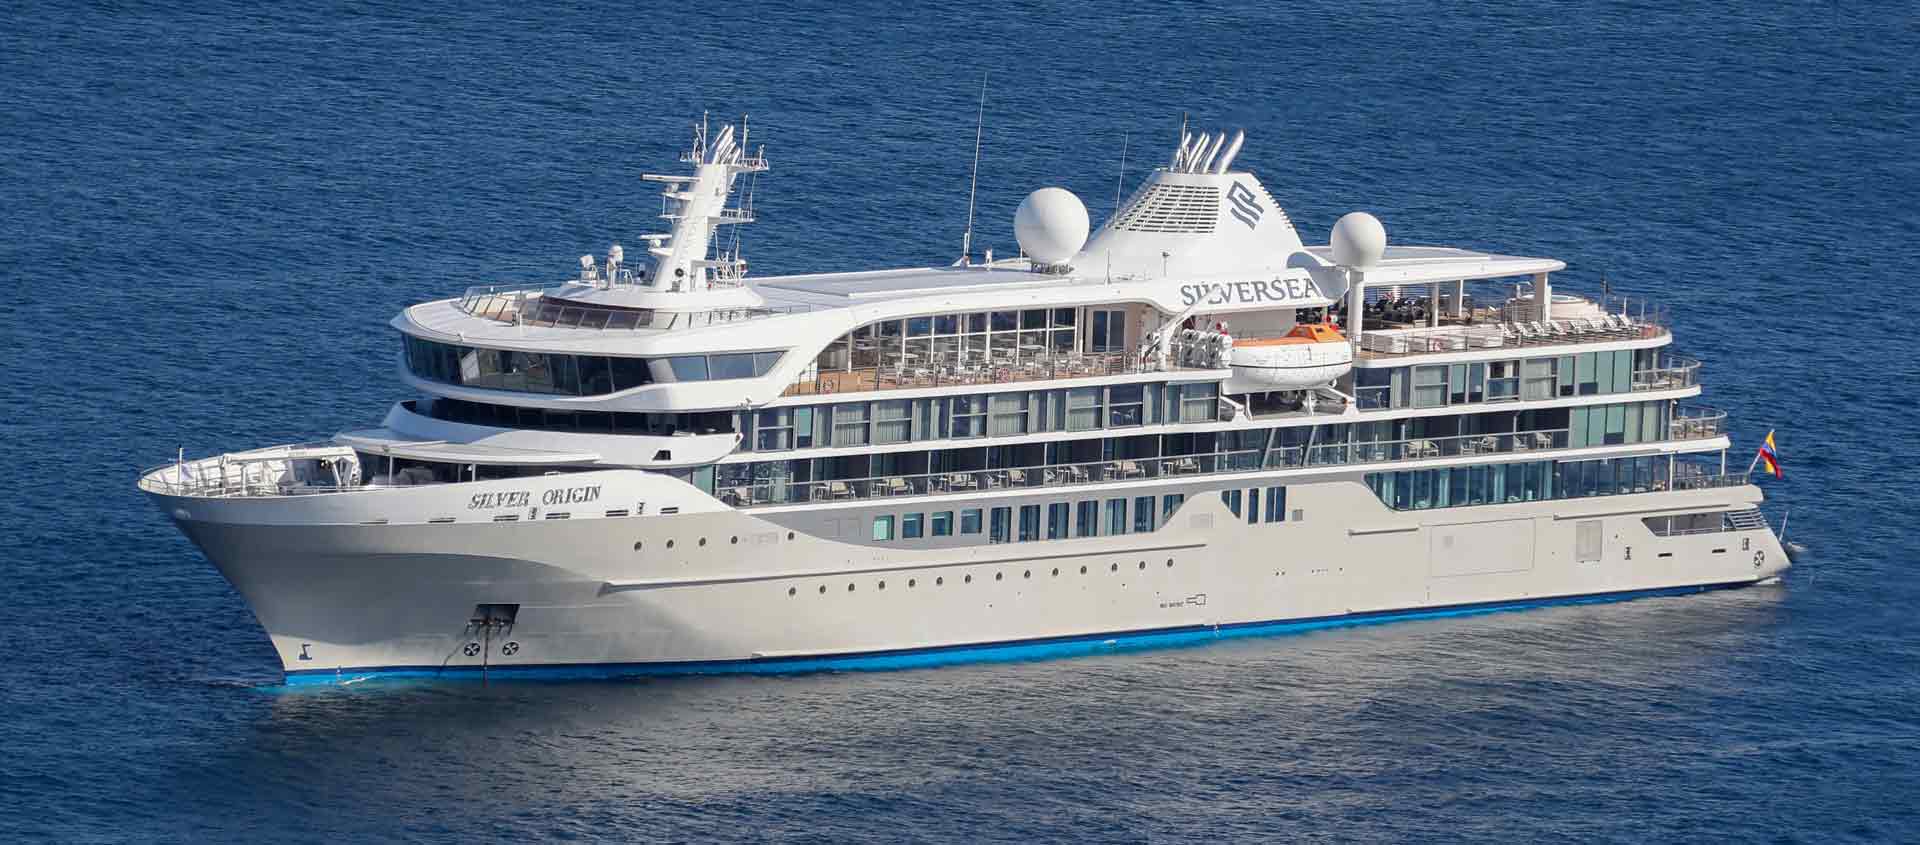 Galápagos Islands cruise picture of Silver Origin